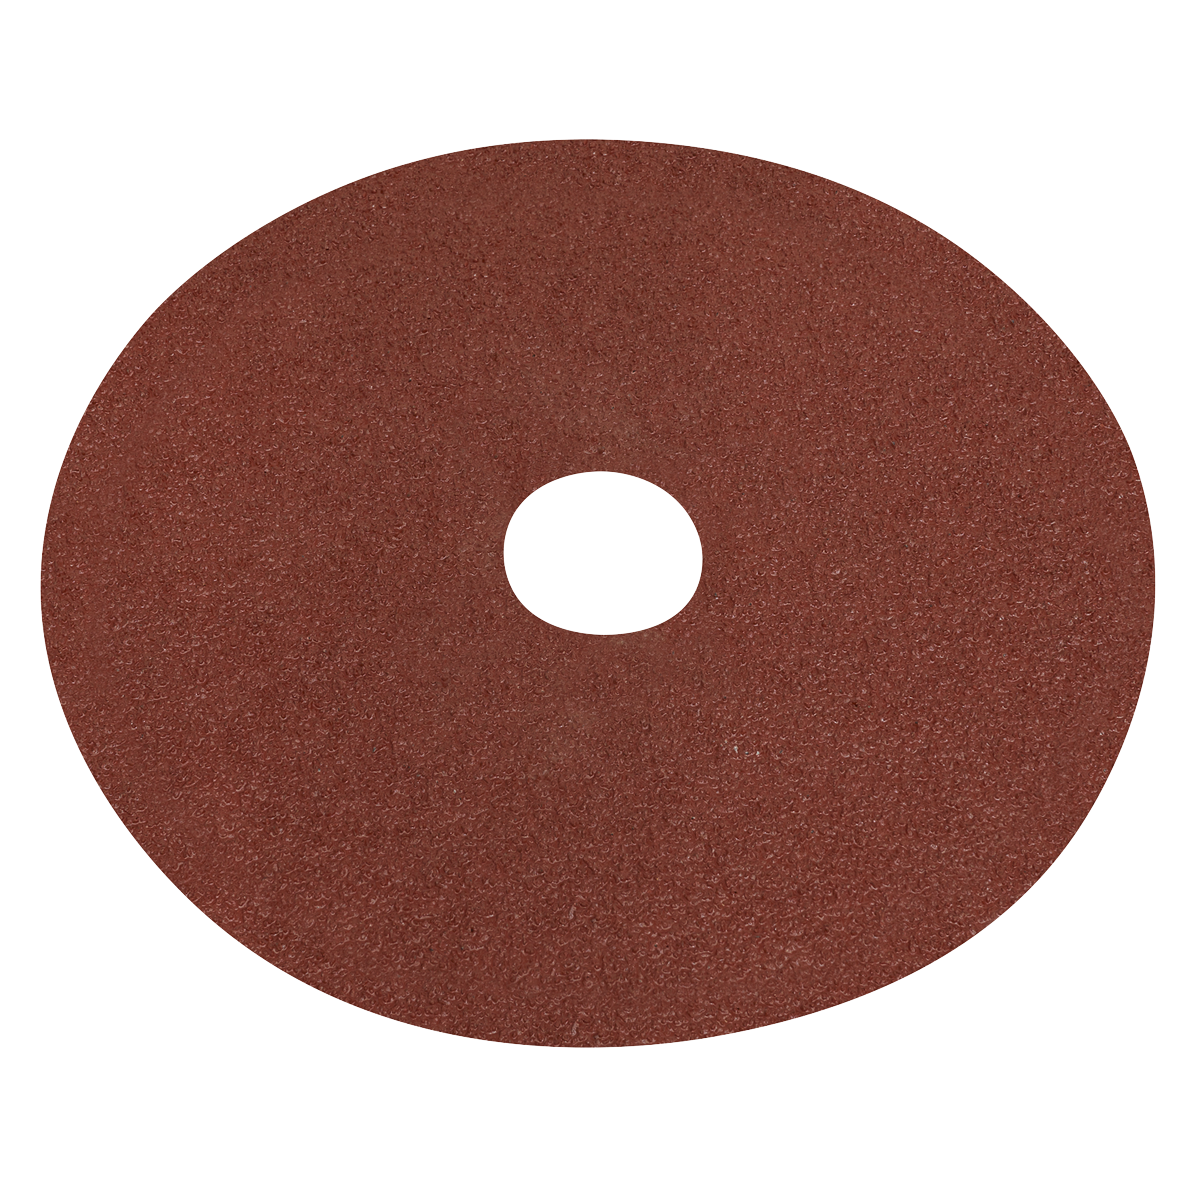 Sealey Fibre Backed Disc Ø125mm - 40Grit Pack of 25